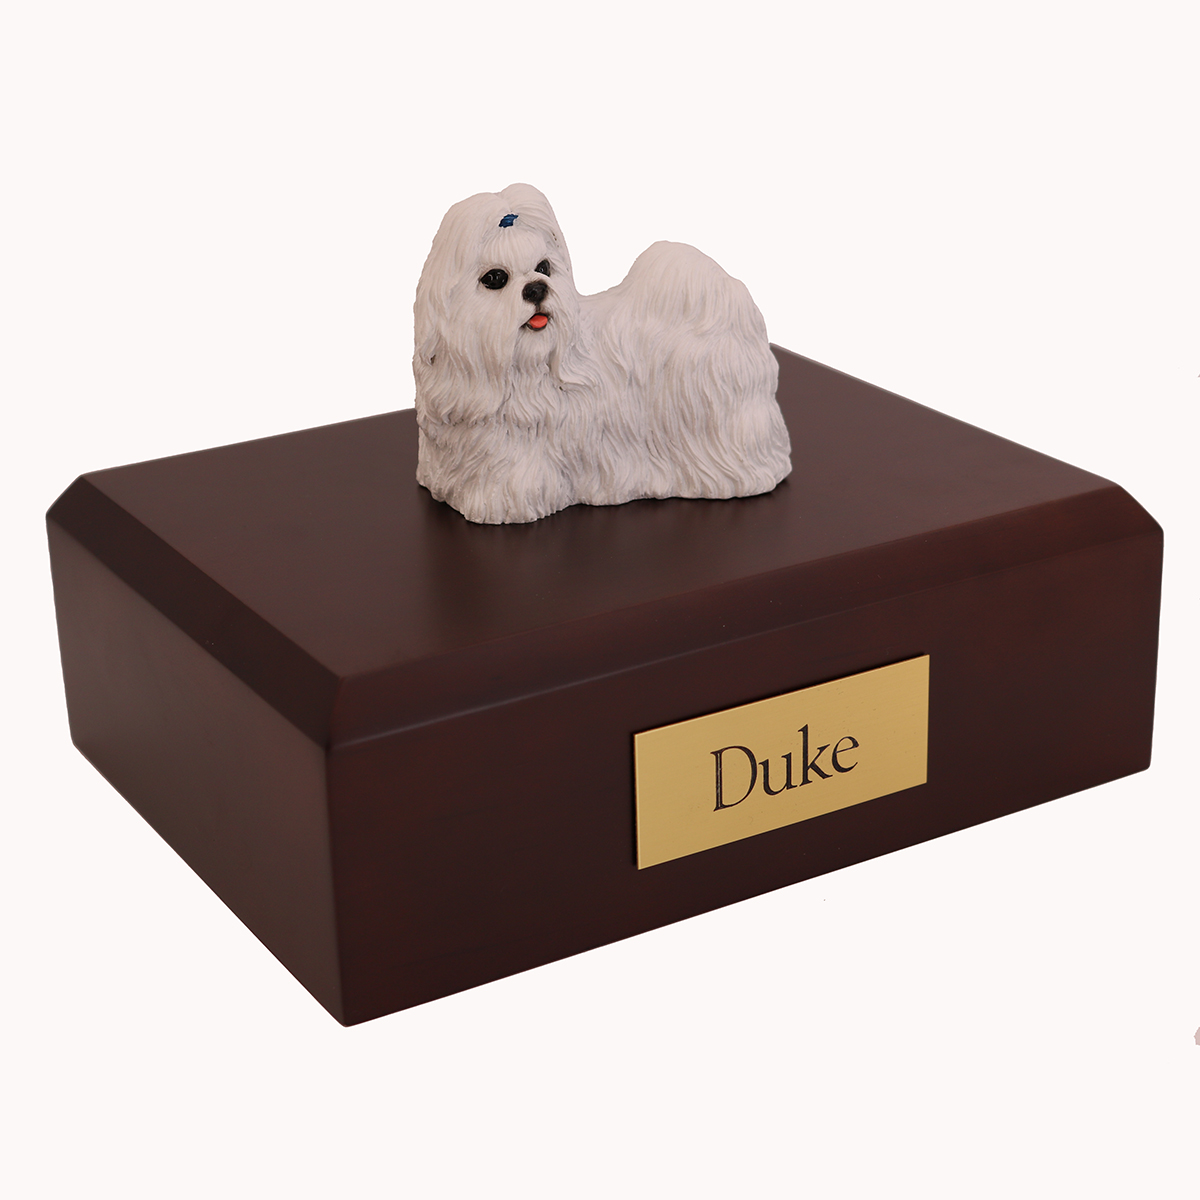 Dog, Shih Tzu, White - Figurine Urn